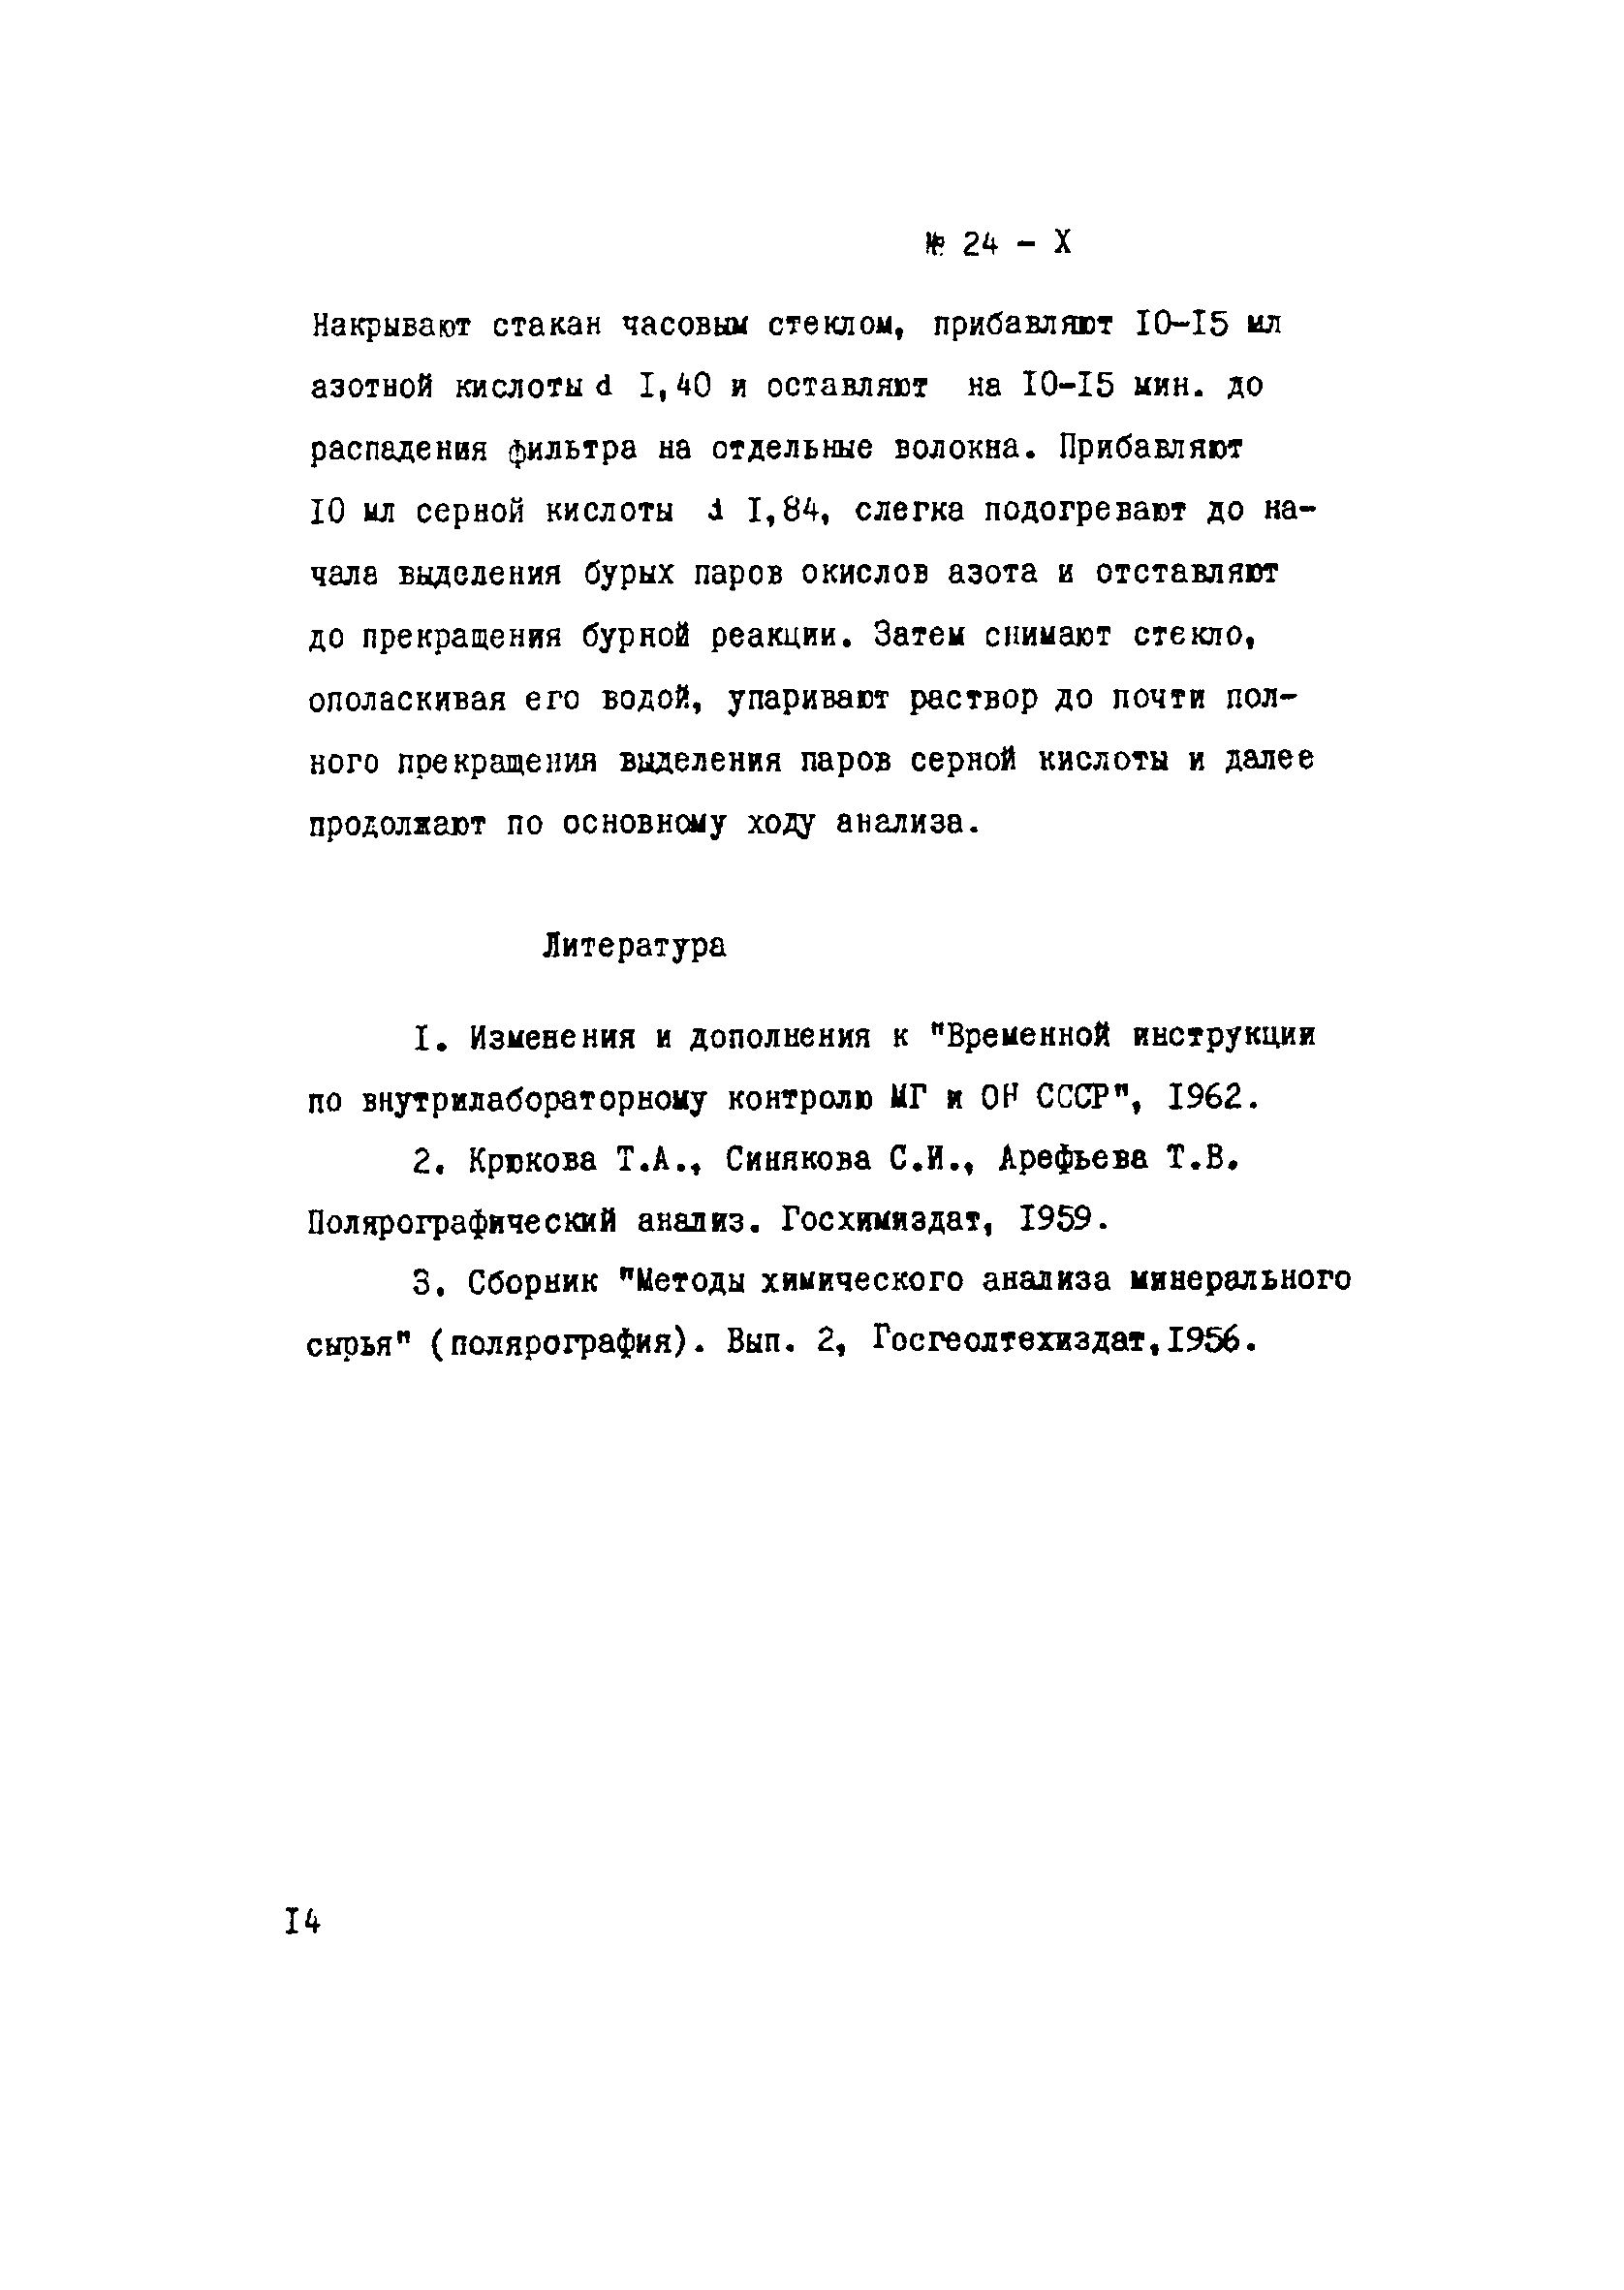 Инструкция НСАМ 24-Х